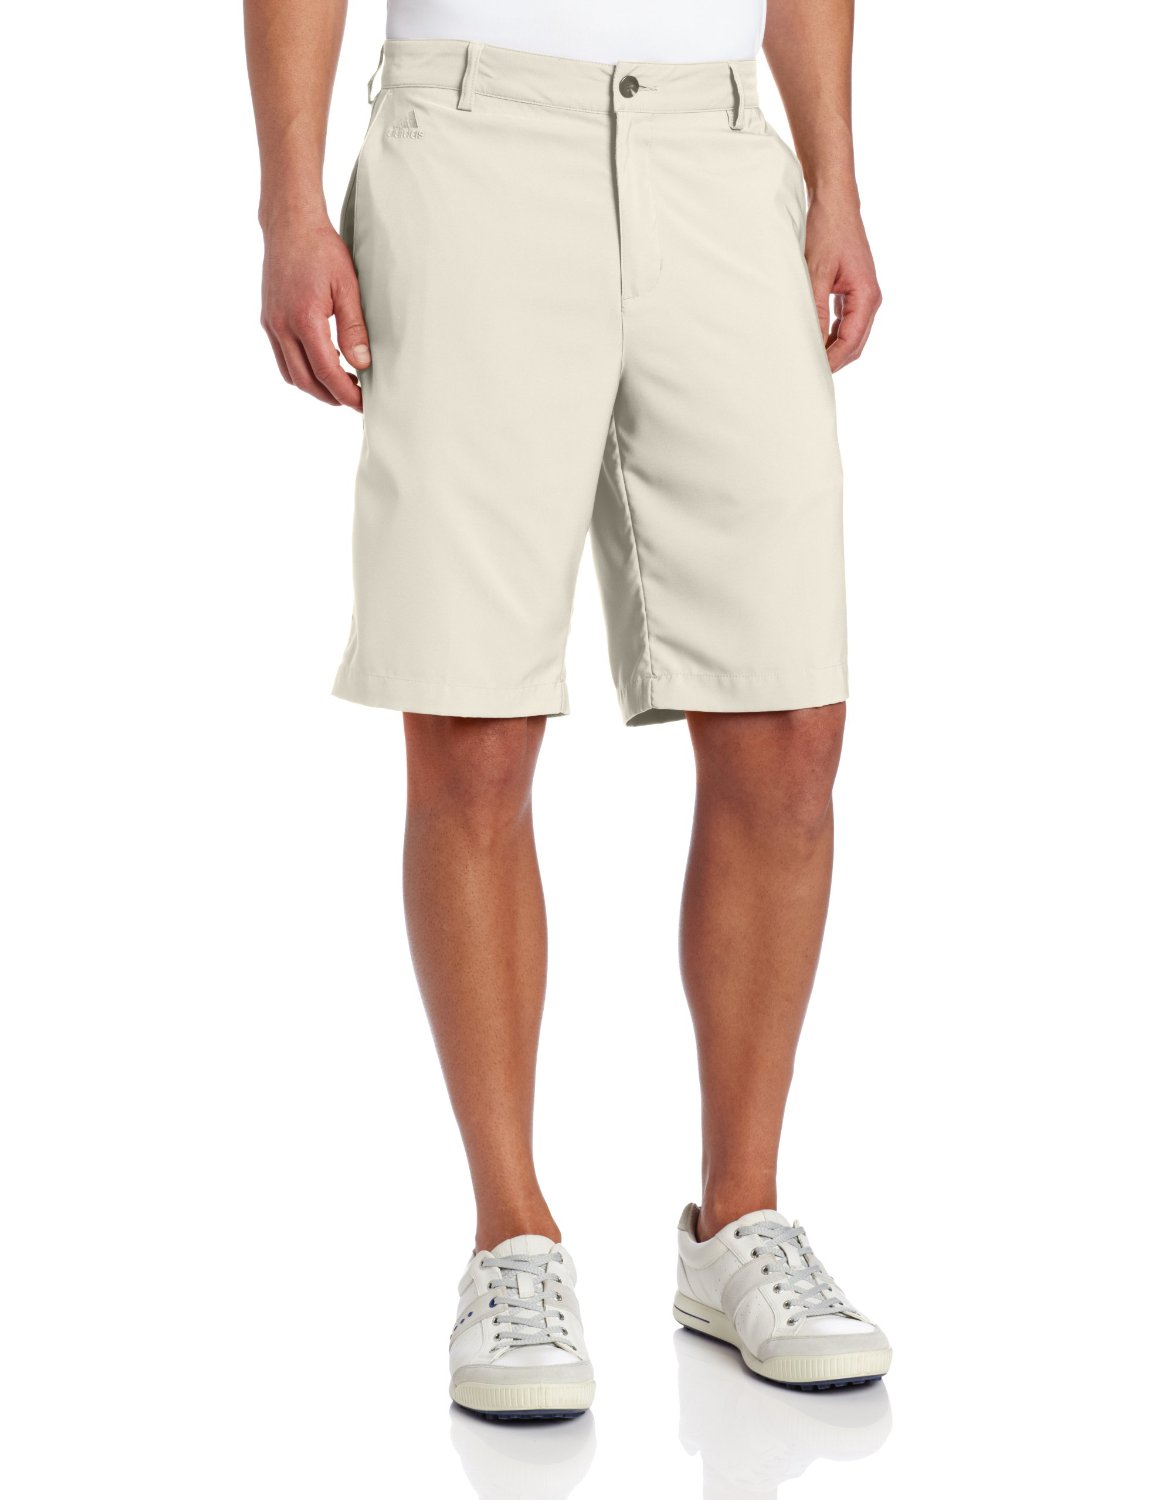 Adidas Climalite 3-Stripes Tech Golf Shorts